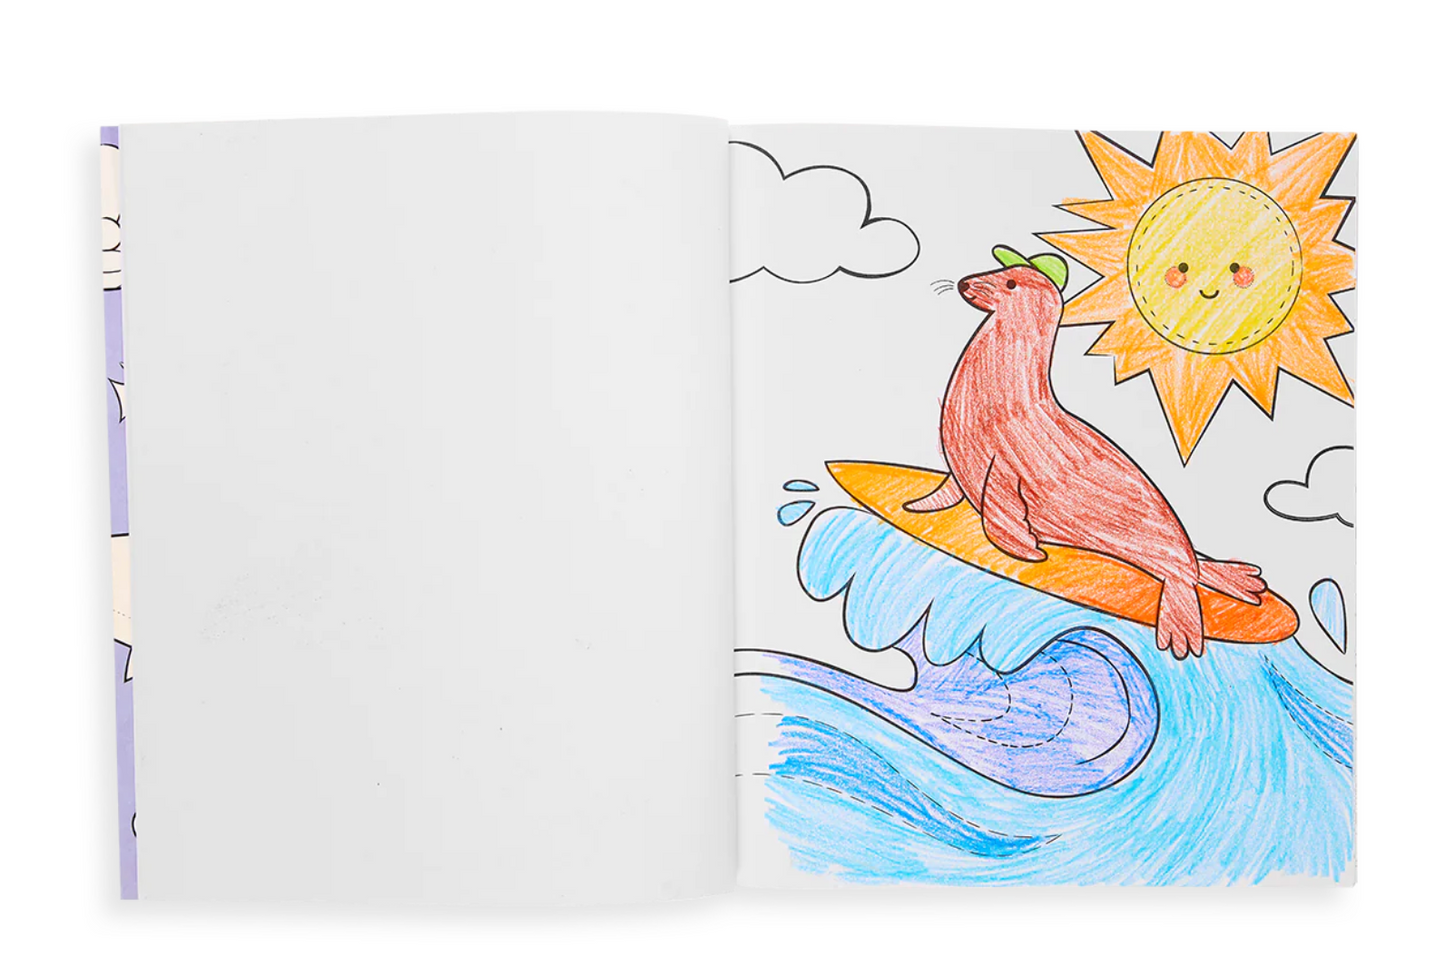 Outrageous Ocean Coloring Book